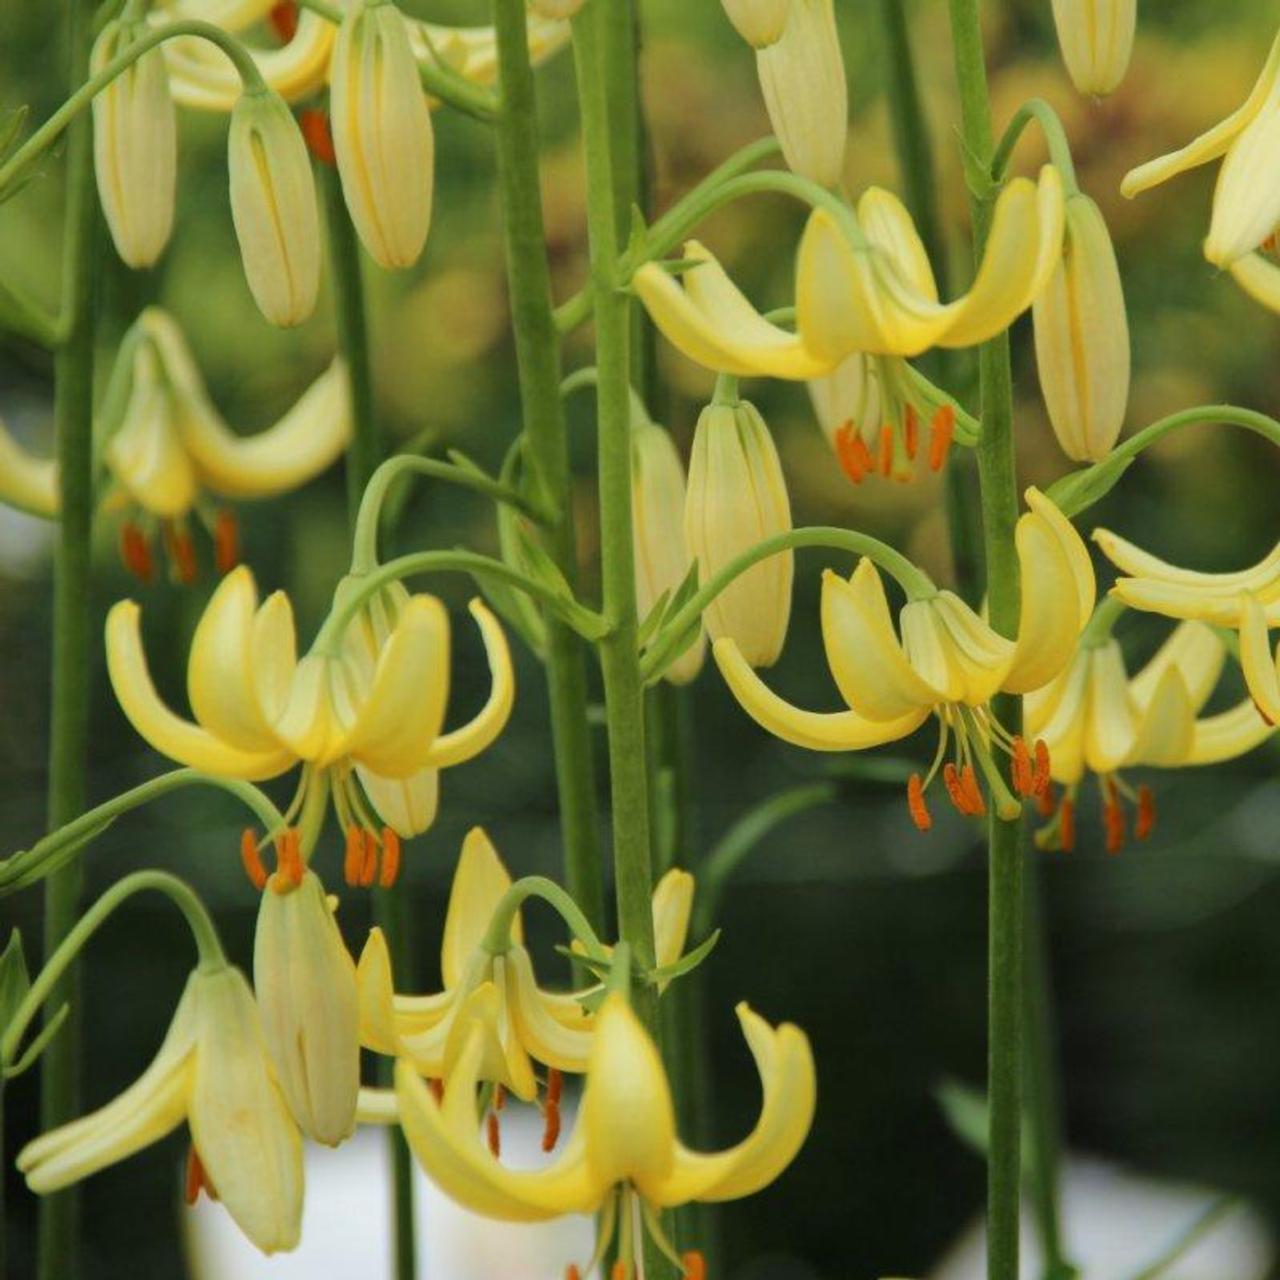 Lilium martagon 'Golden Morning' plant